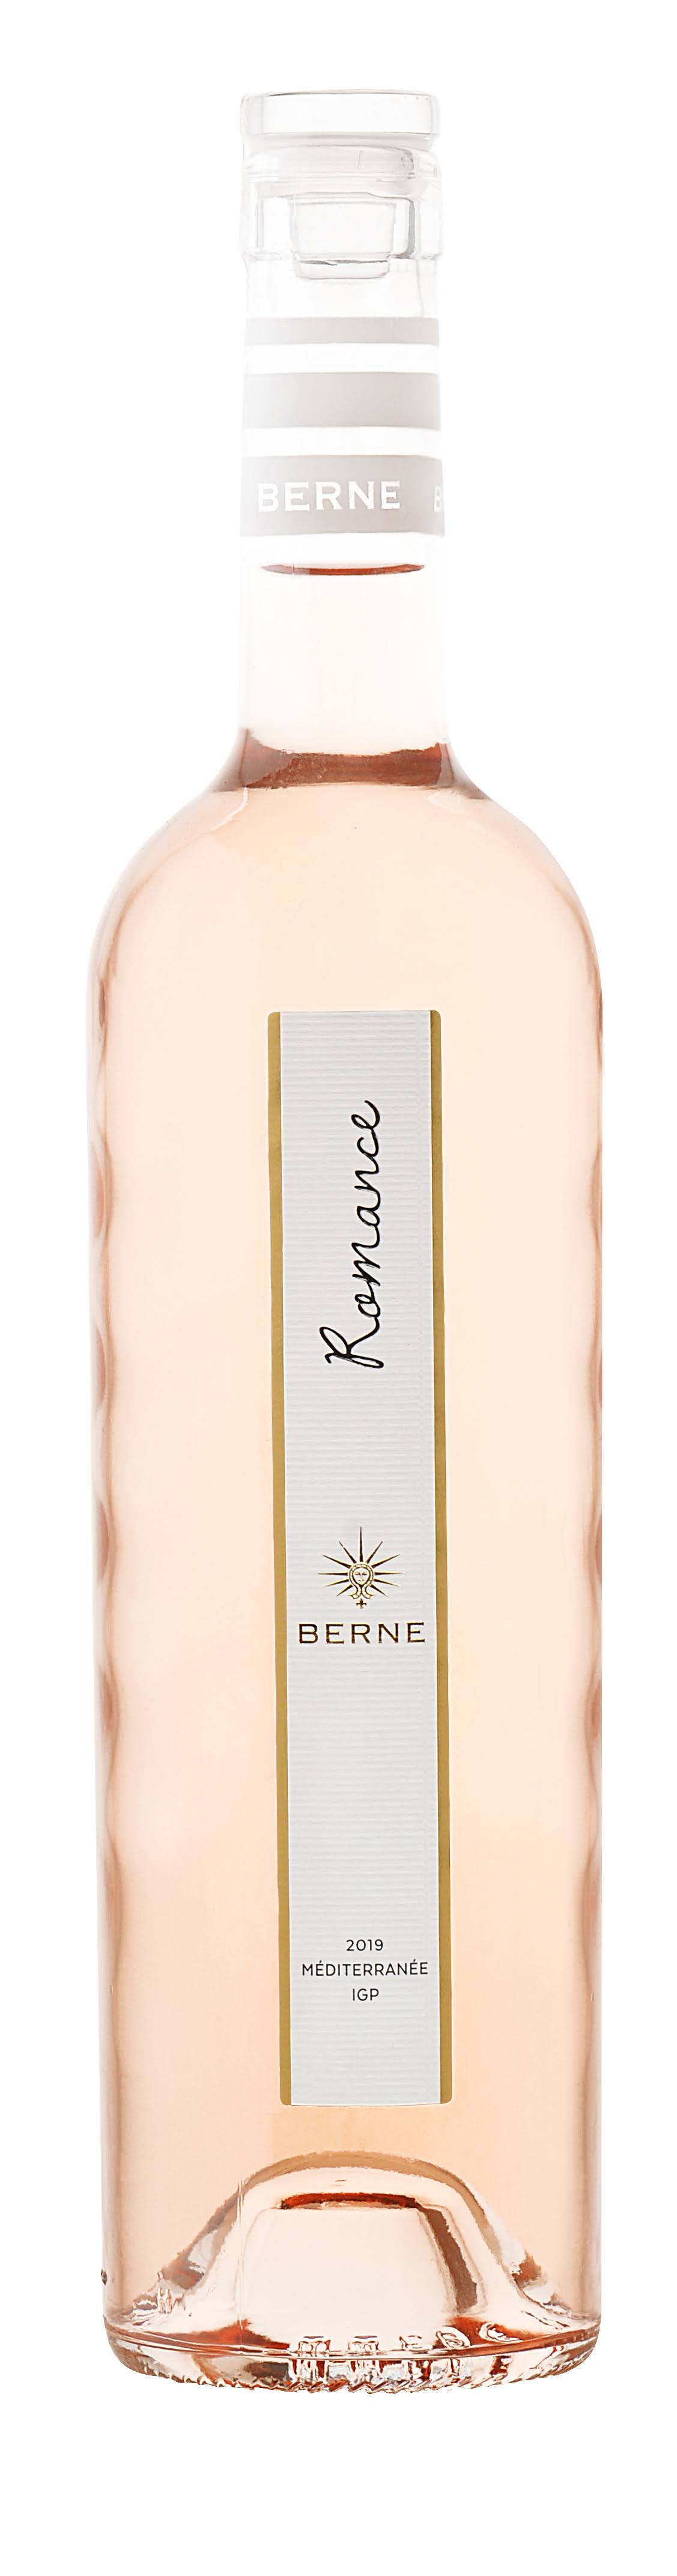 Berne French Rose Wine, Romance, Mediterranee, 2019 - 750 ml